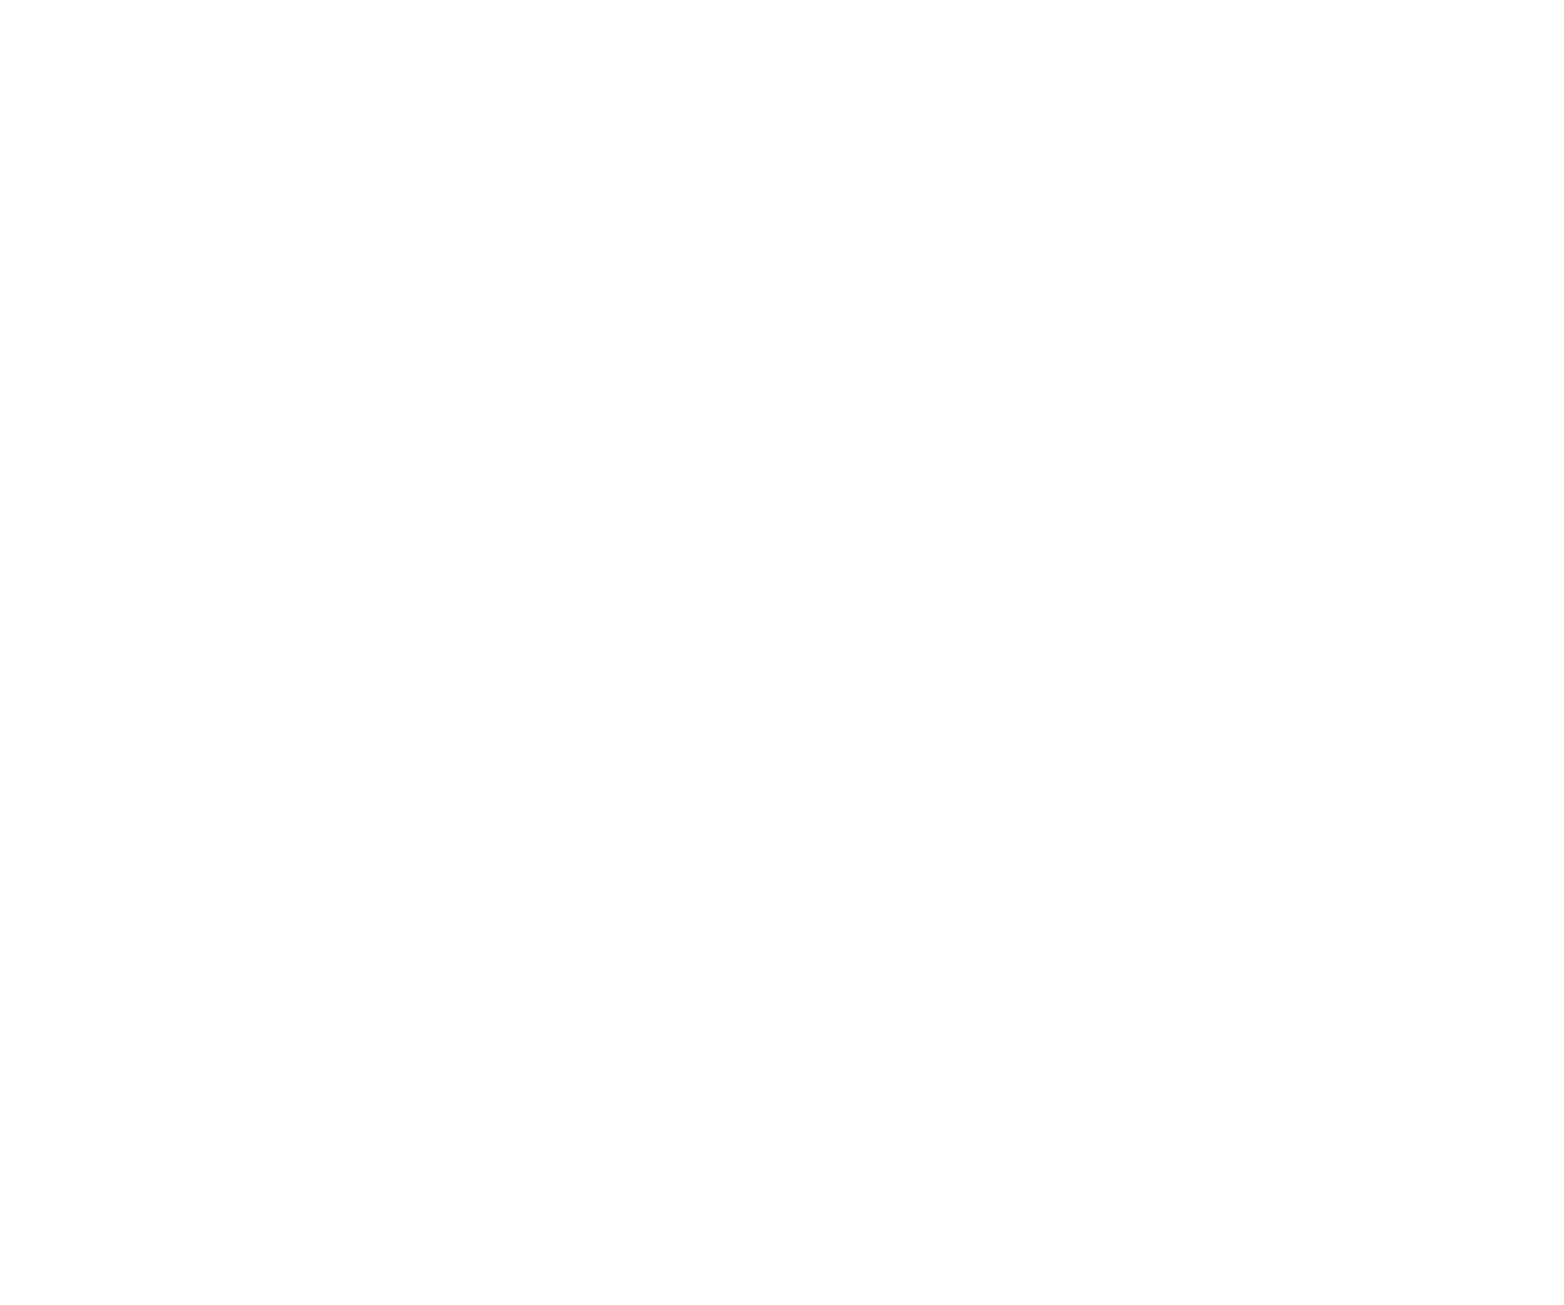 Grupa Zywiec logo for dark backgrounds (transparent PNG)